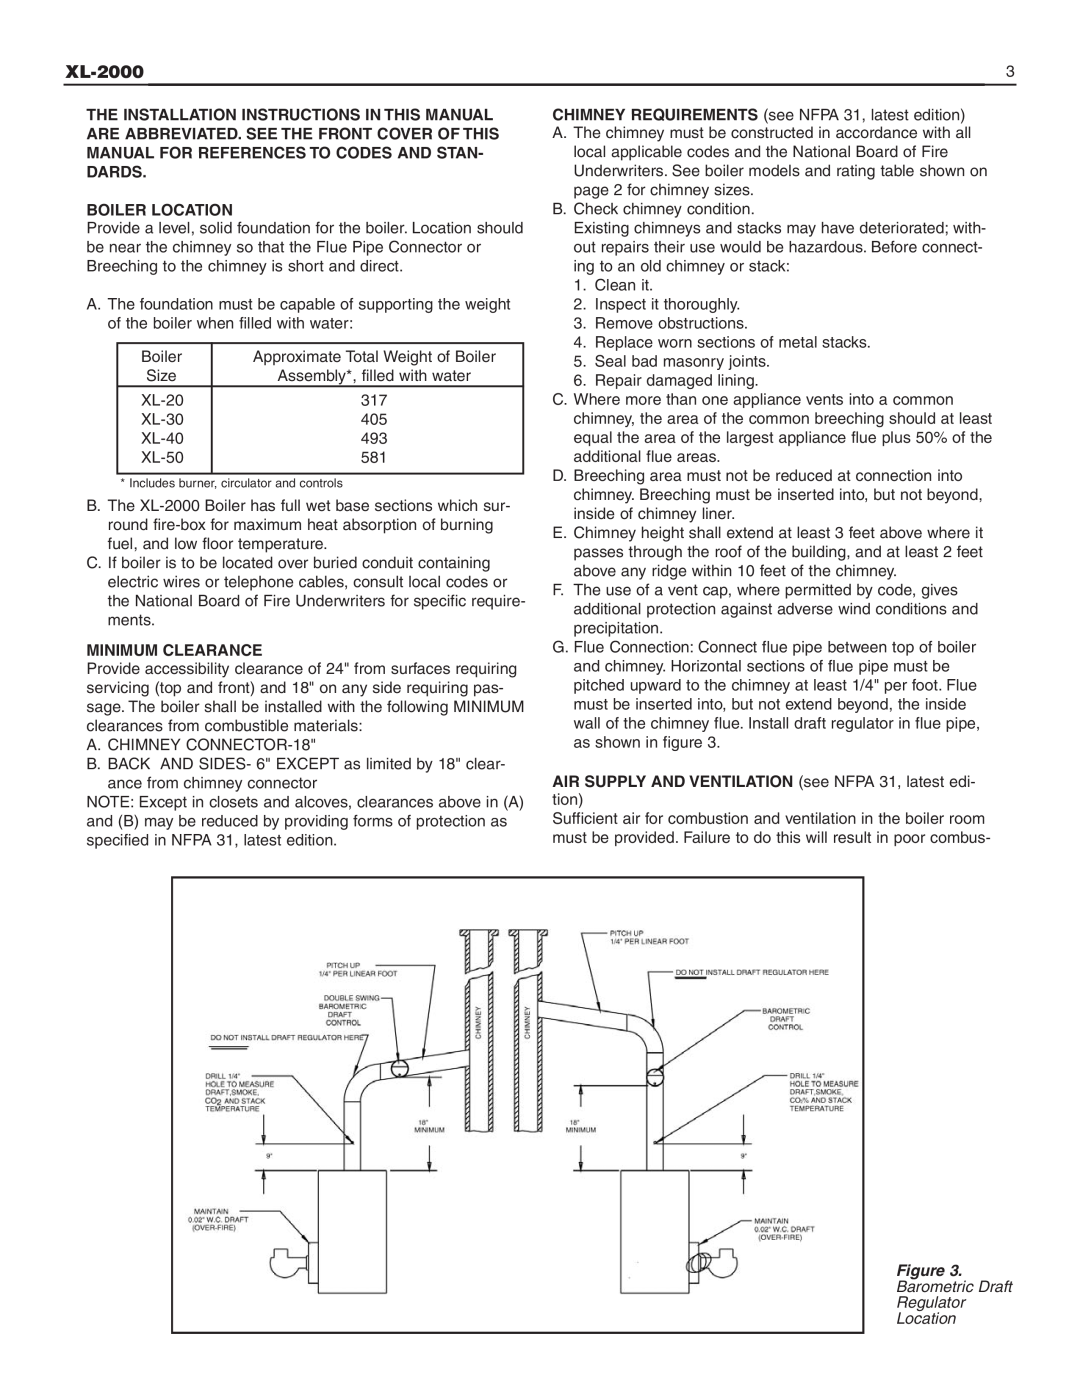 Slant/Fin XL-2000 dimensions Boiler Location, Minimum Clearance 